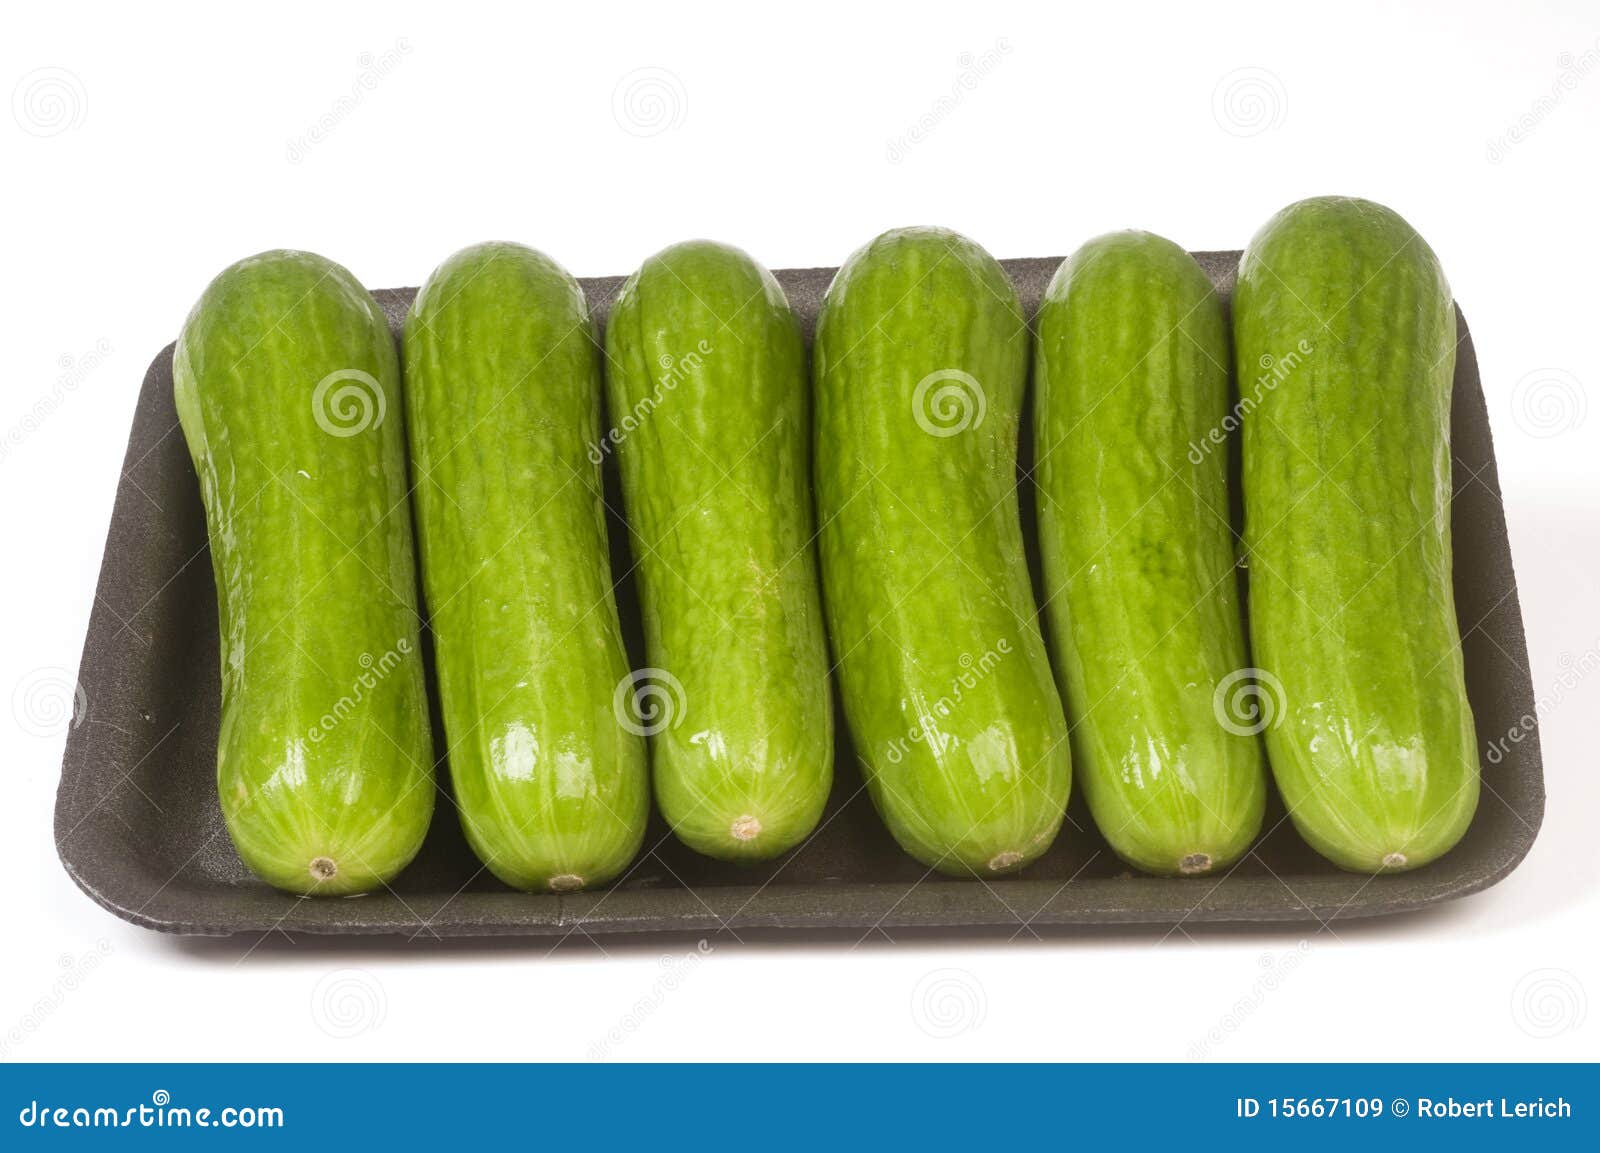 https://thumbs.dreamstime.com/z/persian-mini-cucumbers-15667109.jpg